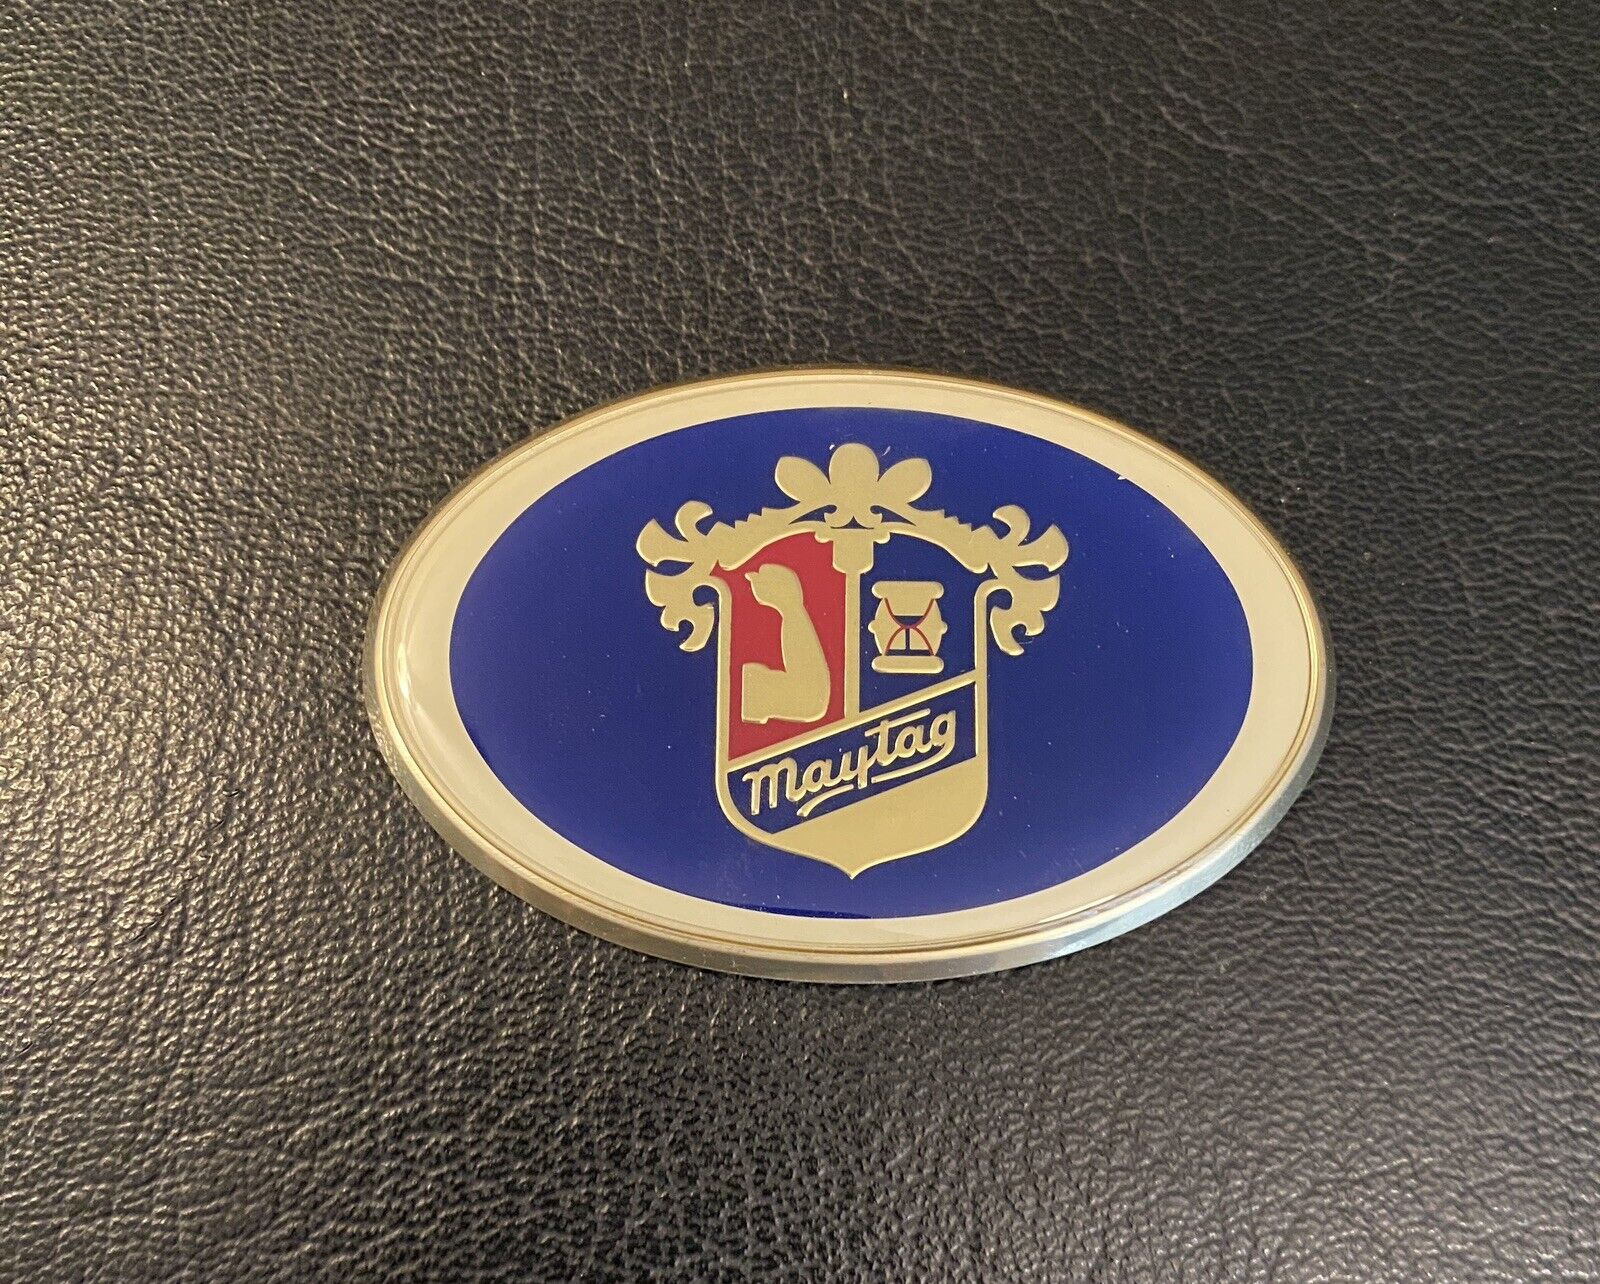 Vintage Maytag Appliance Emblem -  Blue Oval Emblem w/ Crest Logo - Unused